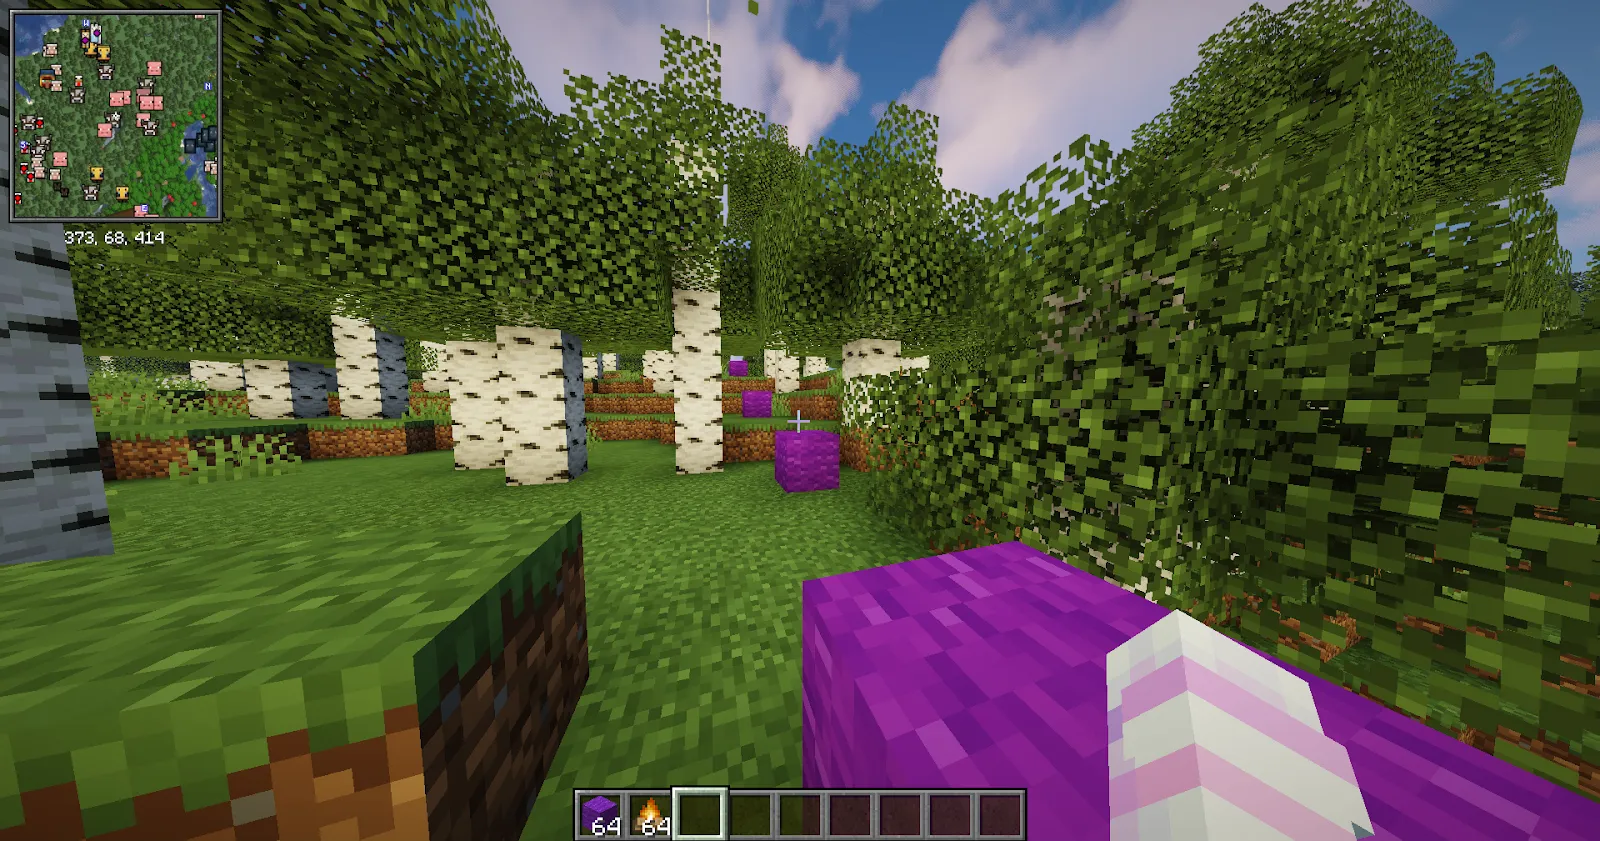 Purple wool blocks marking pathway in Minecraft